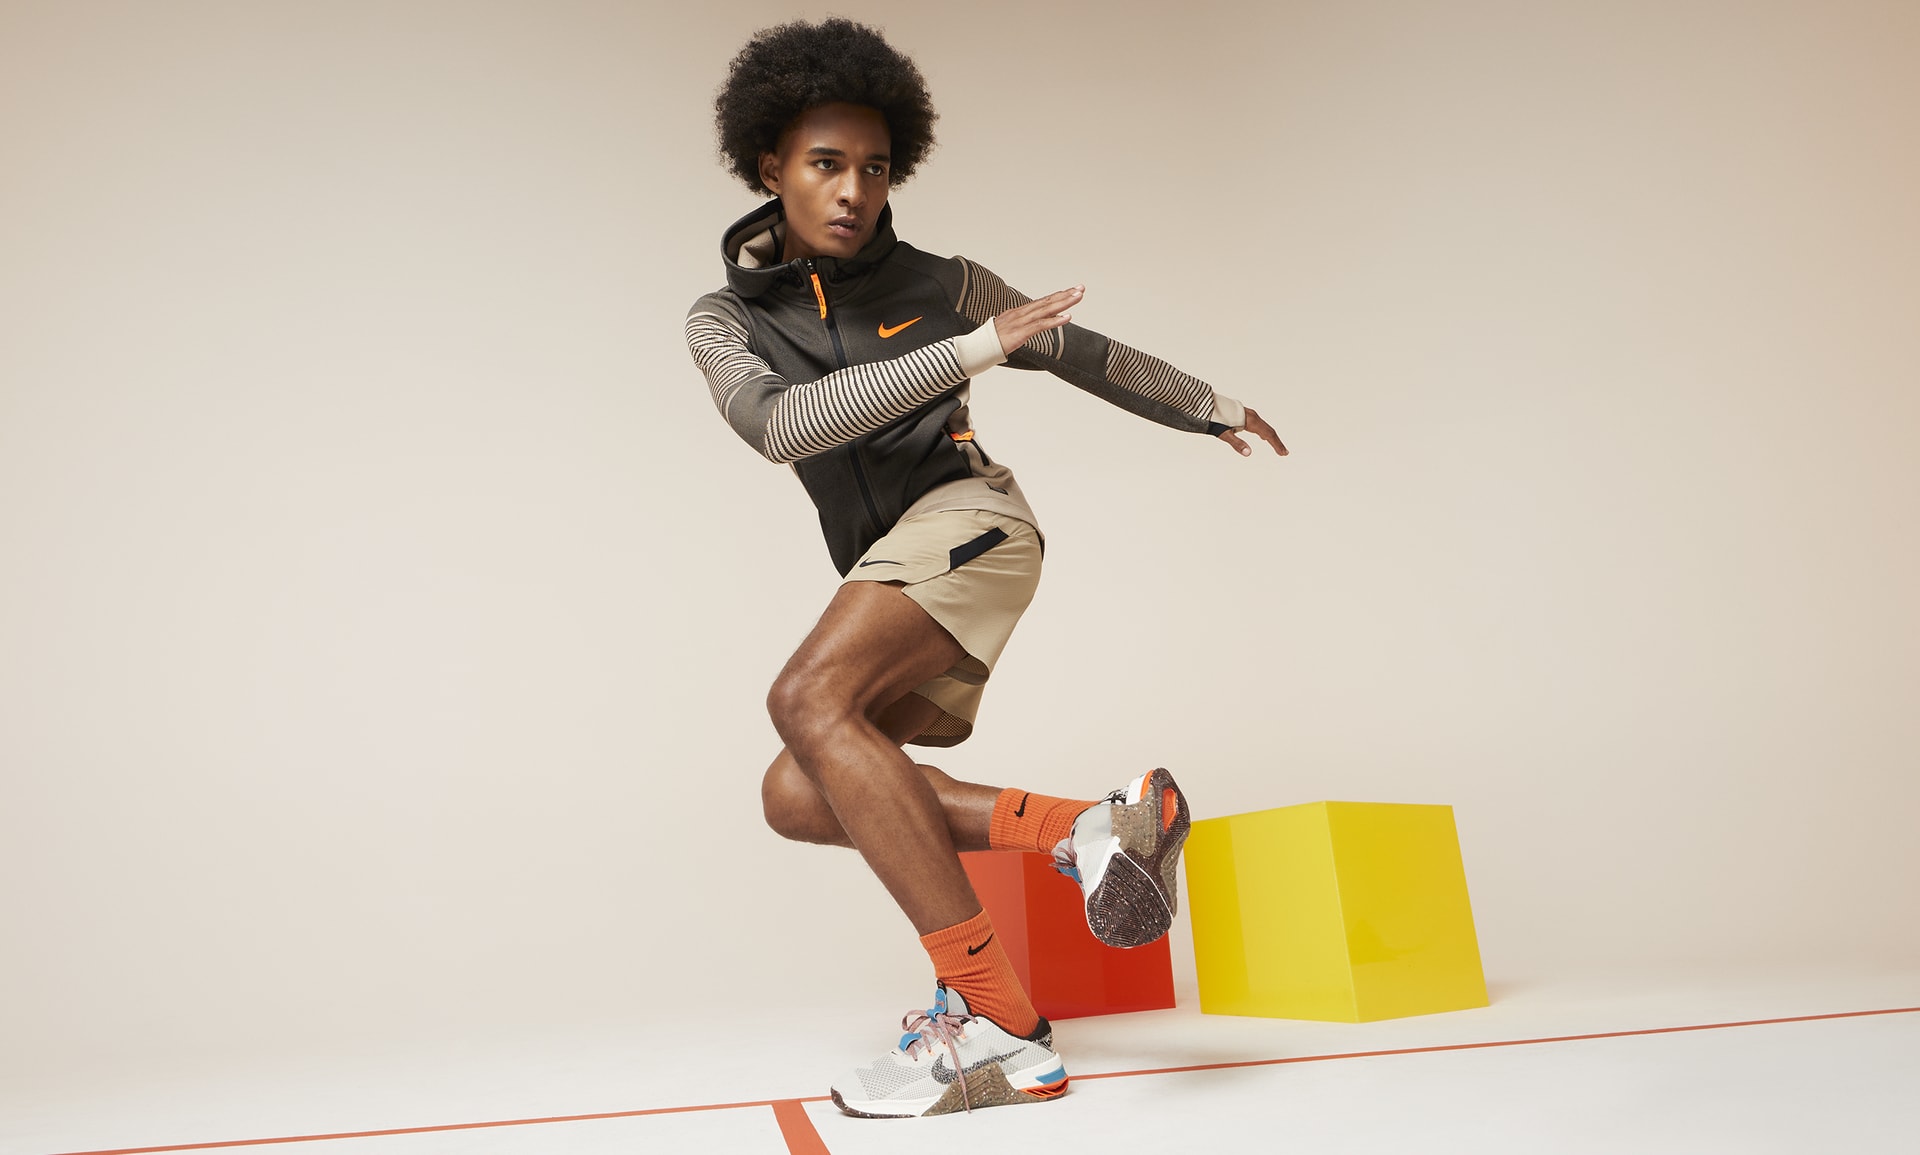 Nike Dri-FIT Flex Rep Pro Collection Men's 8 Unlined Training Shorts.